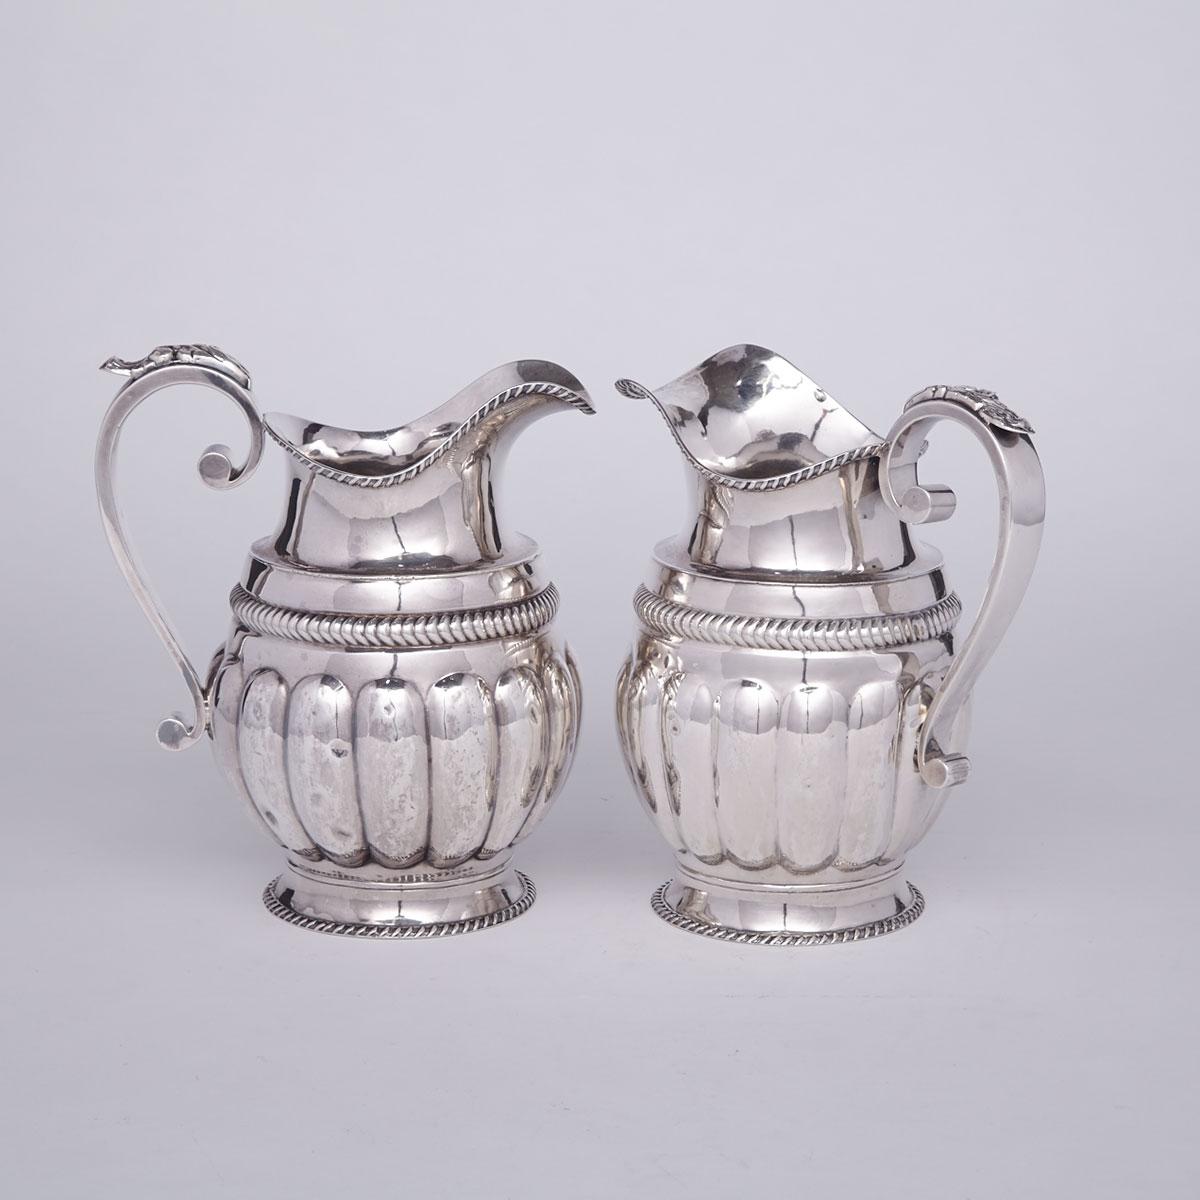 Pair of American Silver Water Jugs, possibly John B. Jones, Boston, Mass., c.1825